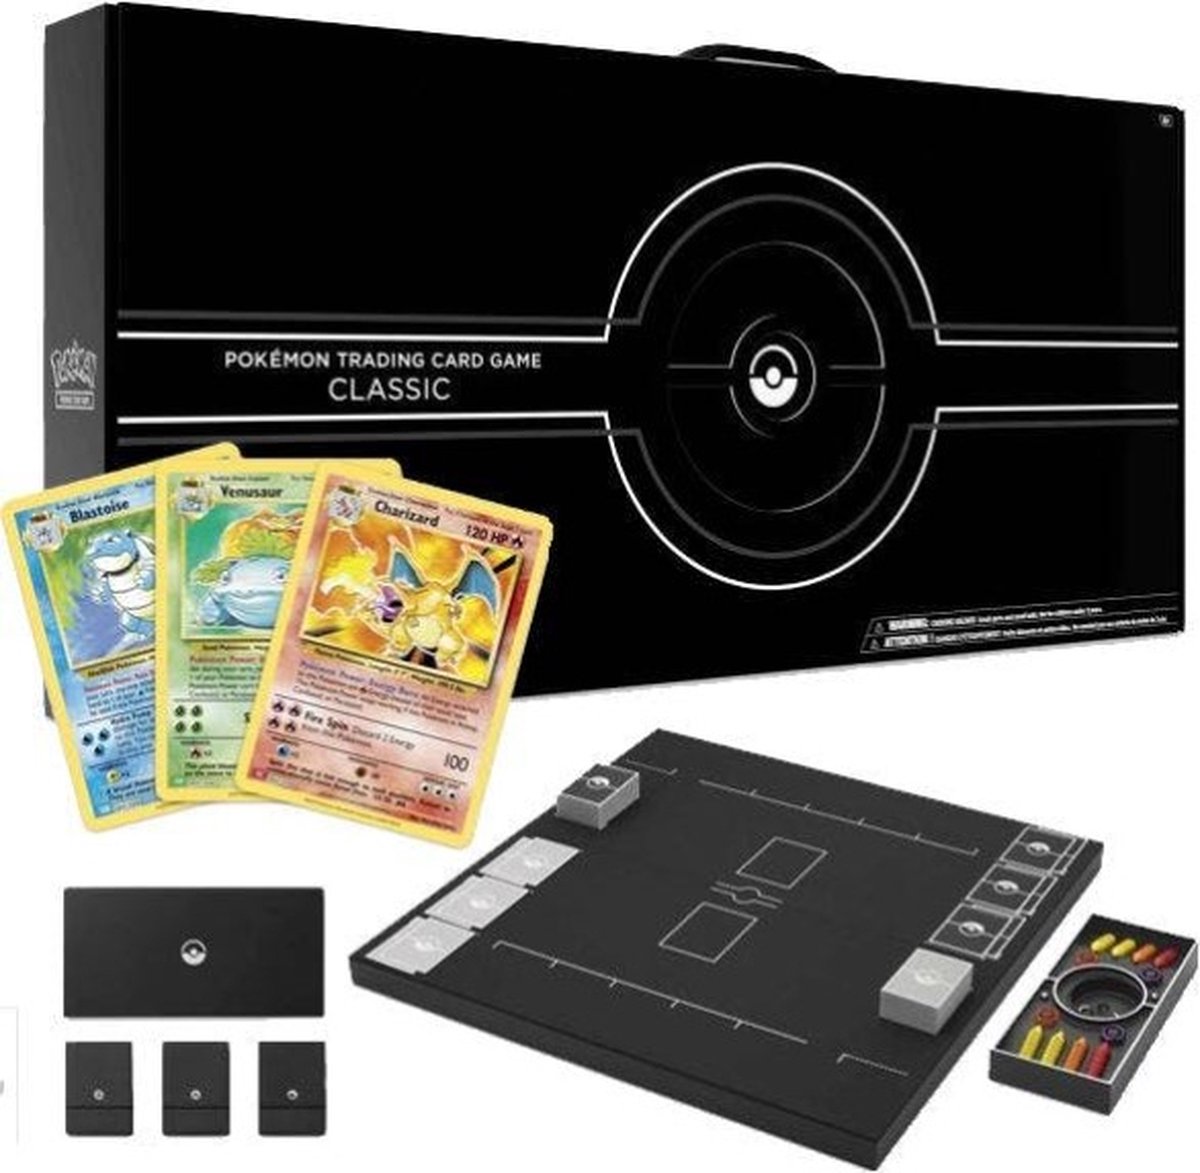 Pokémon Trading Card Game Classic Exclusiefste Box Ooit Uitgebracht